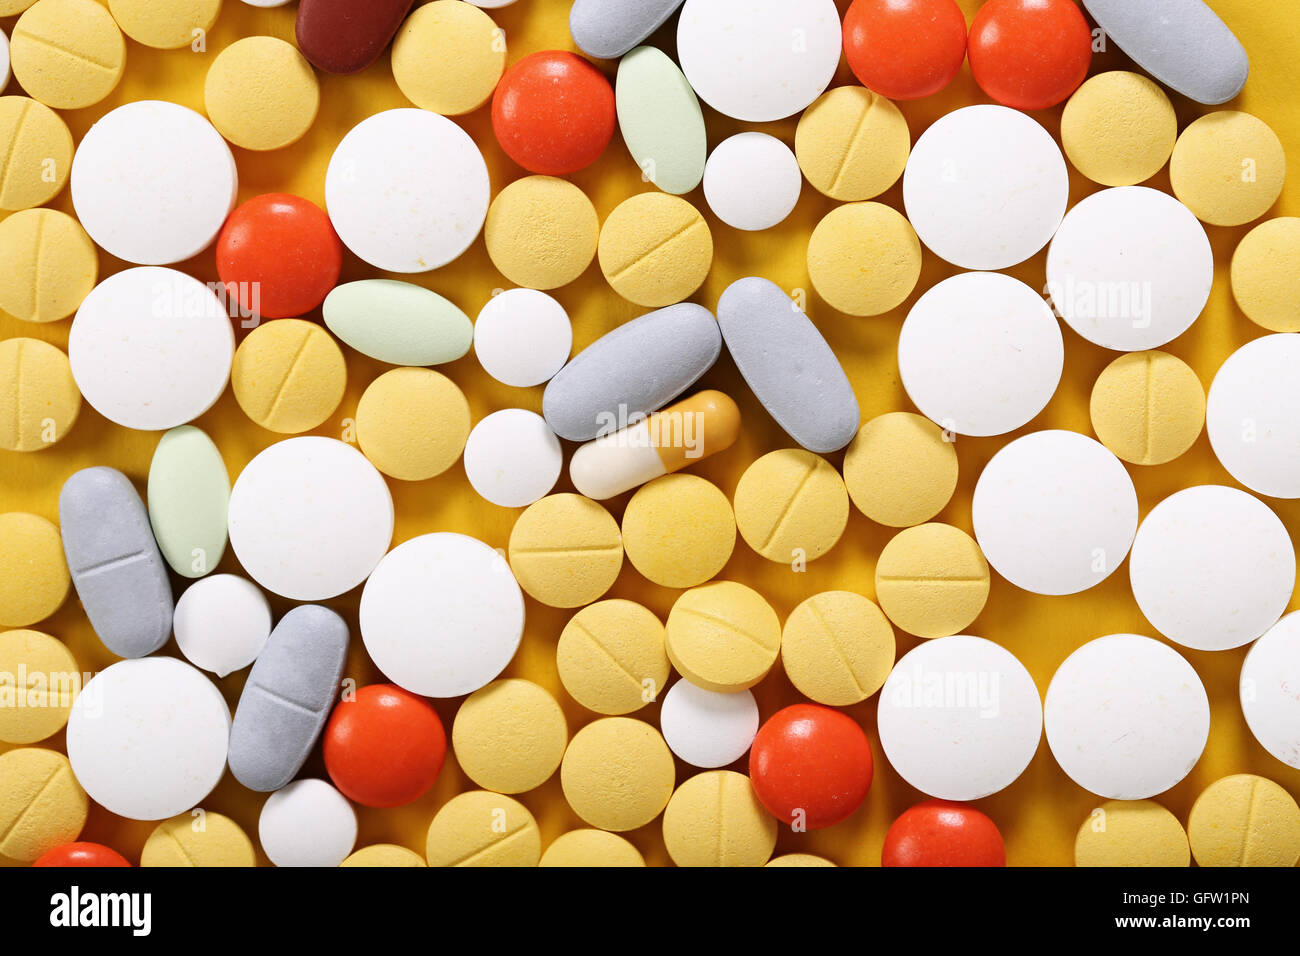 Pills Stock Photo